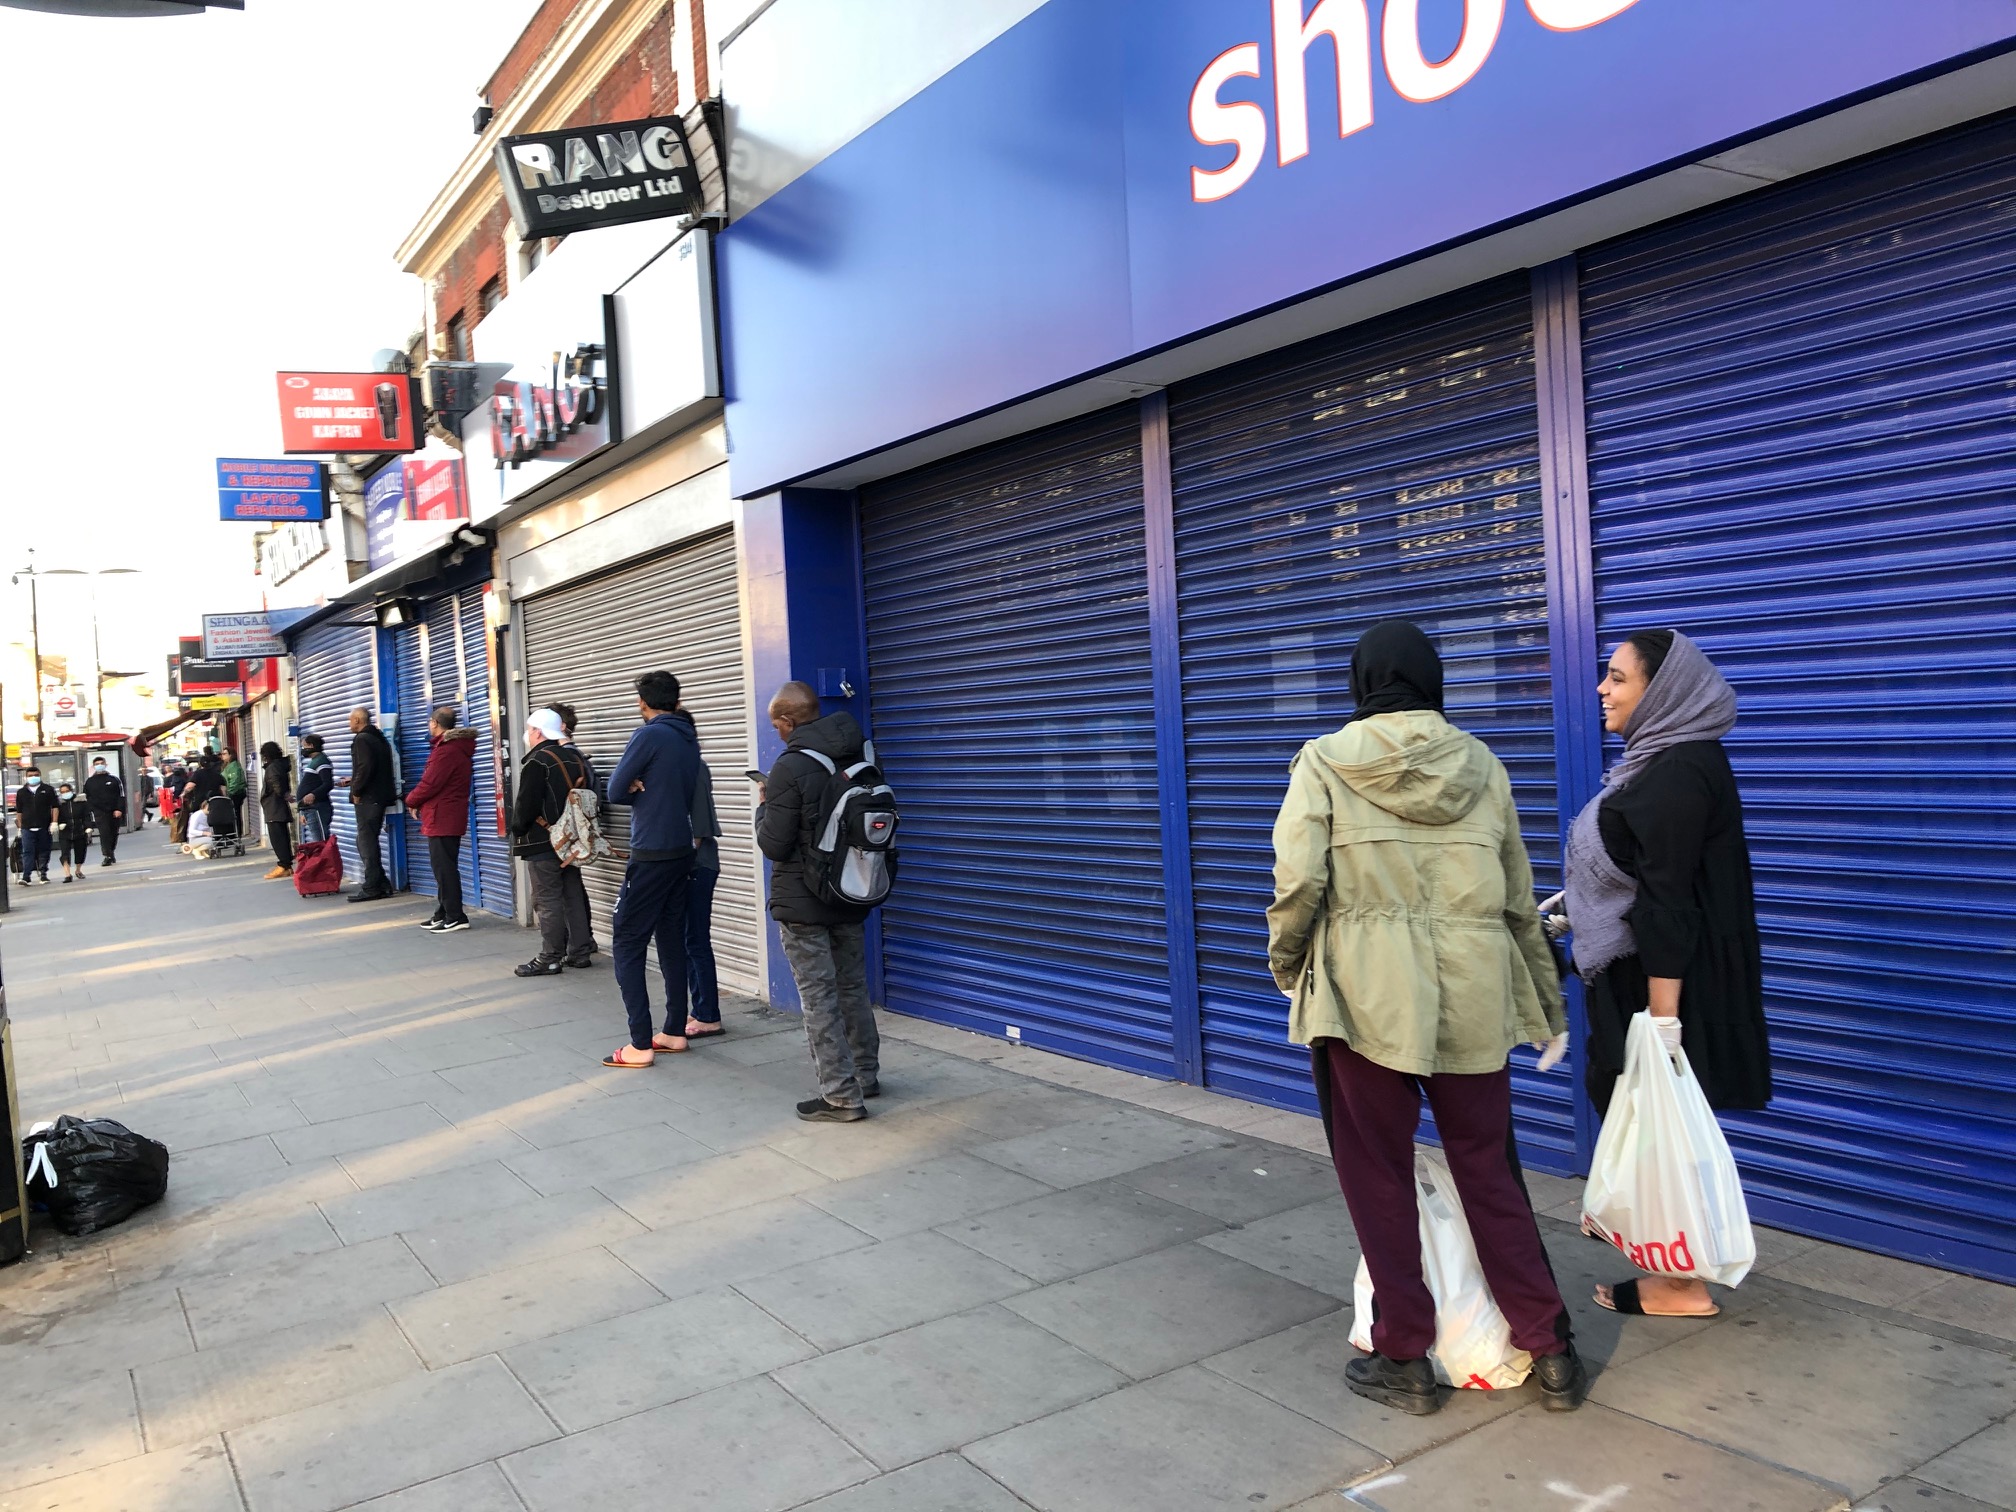 queue outside supermarket observing social distancing, East London 